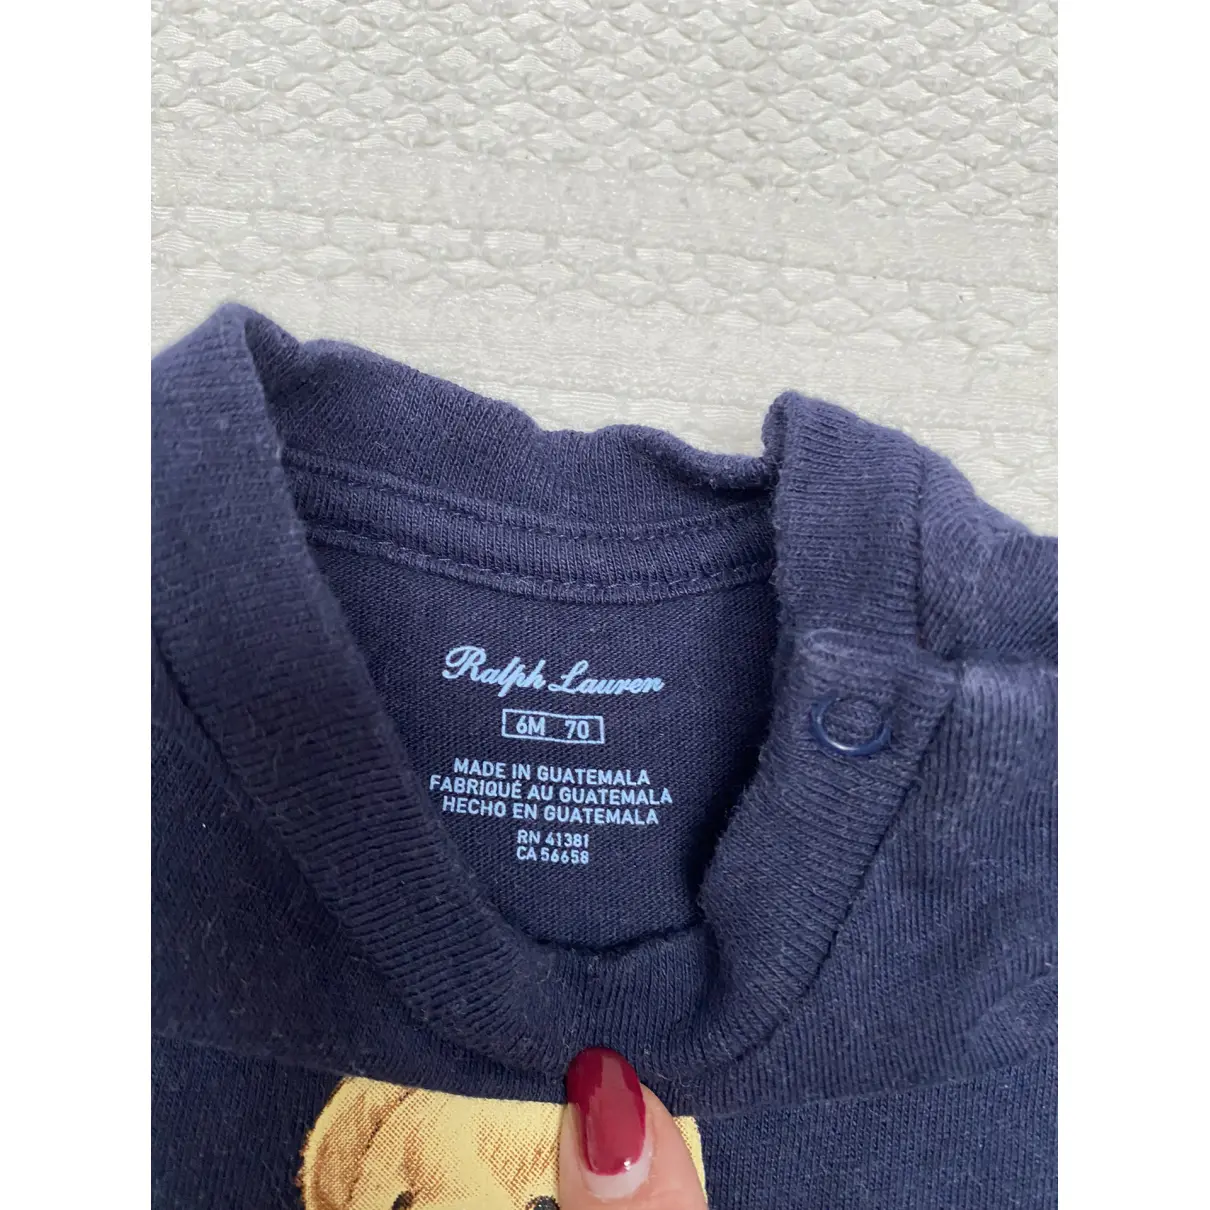 Buy Ralph Lauren Knitwear online